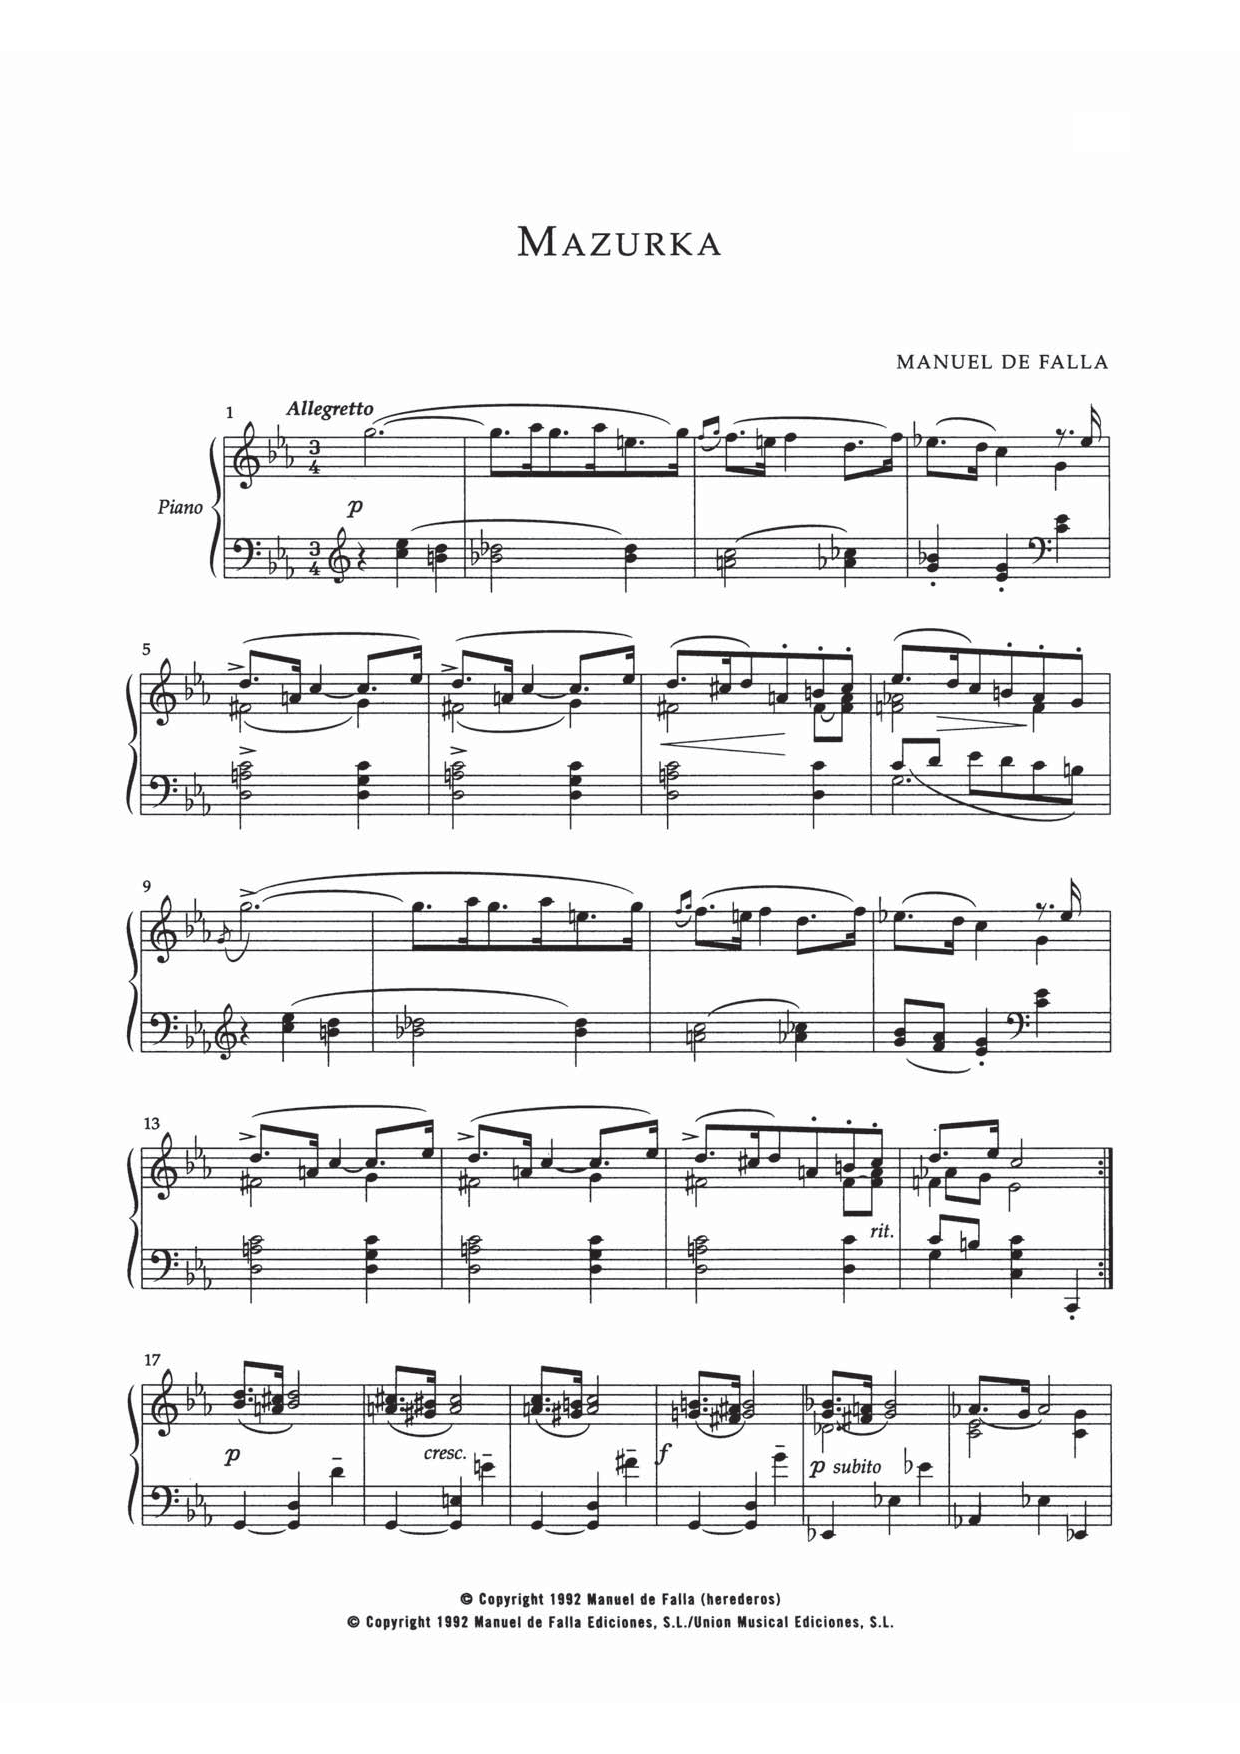 Manuel De Falla Mazurka In Do Menor Sheet Music Notes & Chords for Piano - Download or Print PDF